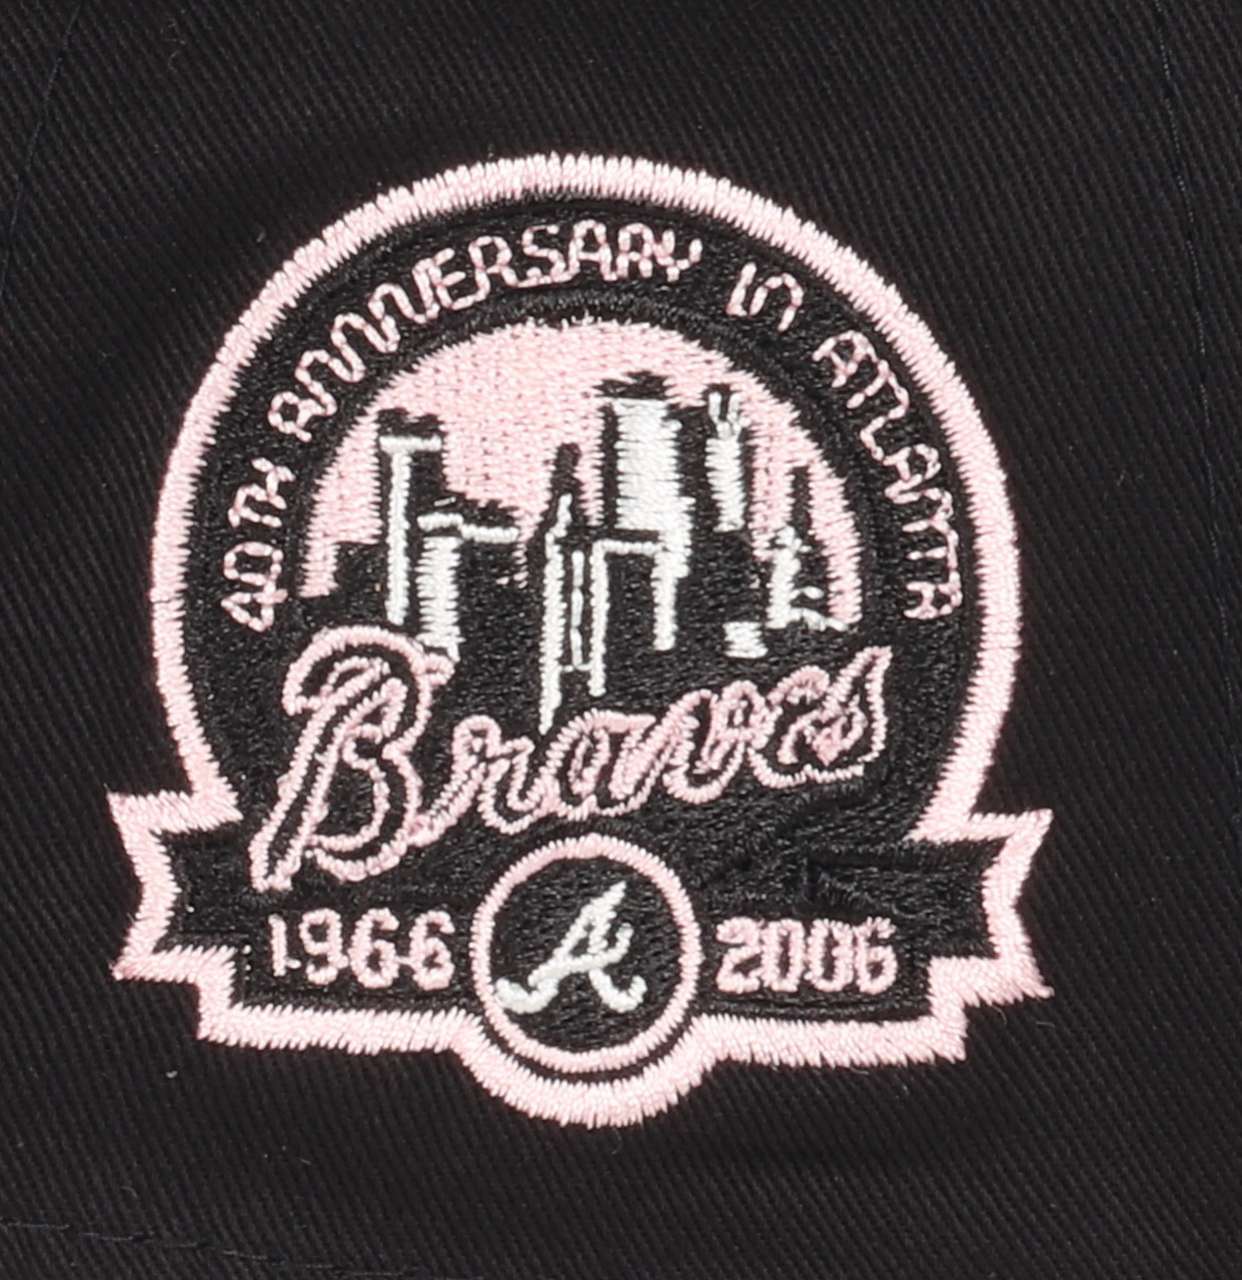 Atlanta Braves MLB  40th Anniversary Sidepatch Black 9Forty A-Frame Adjustable Cap New Era